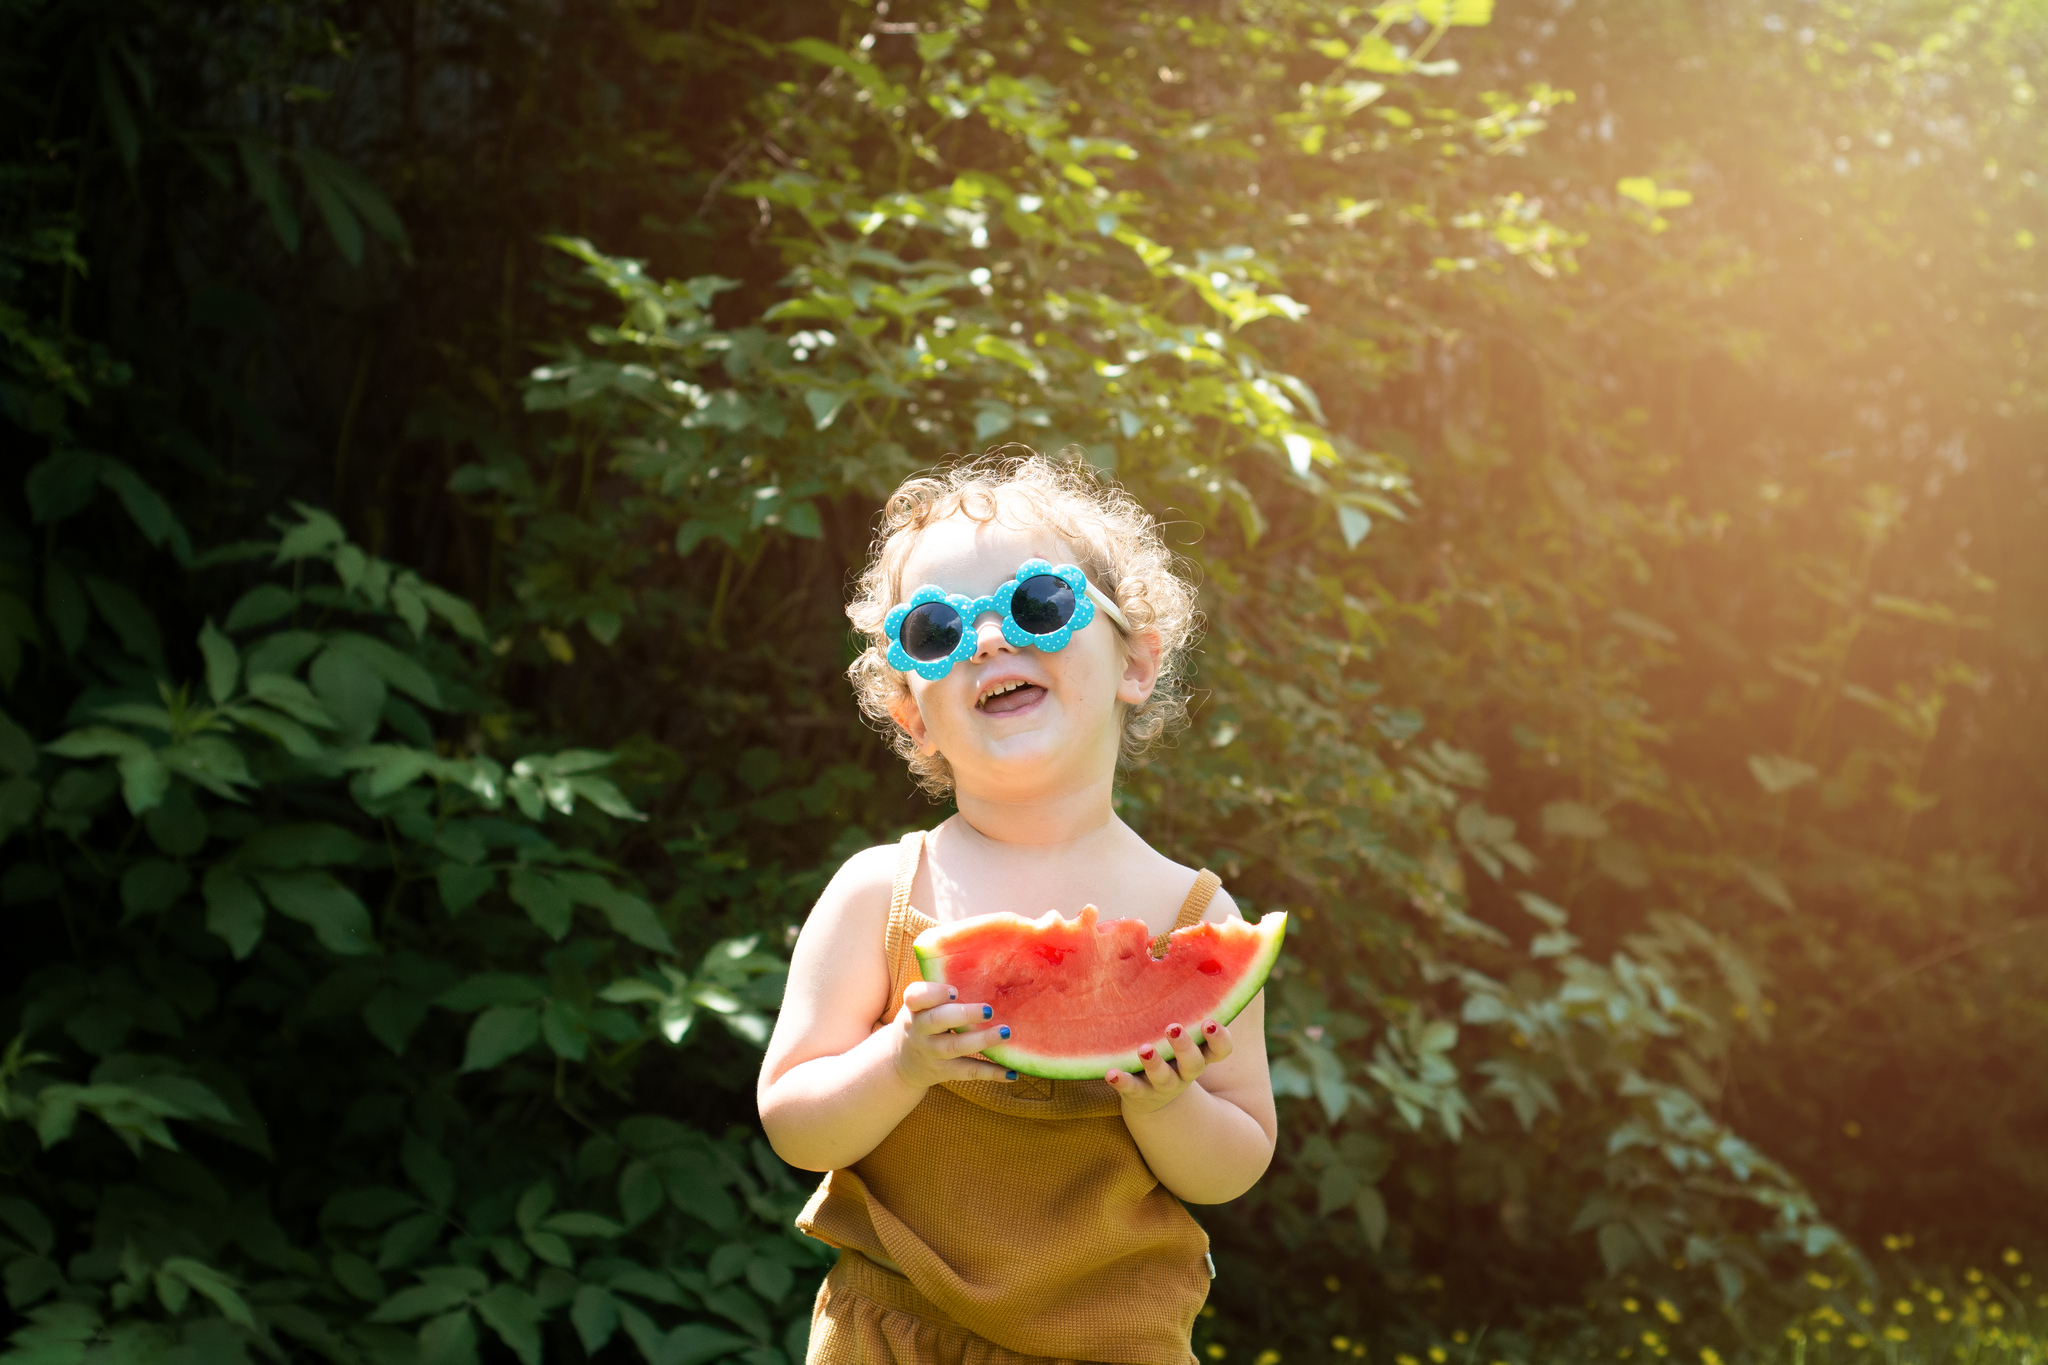 Environmental Portrait - Child with Watermelon